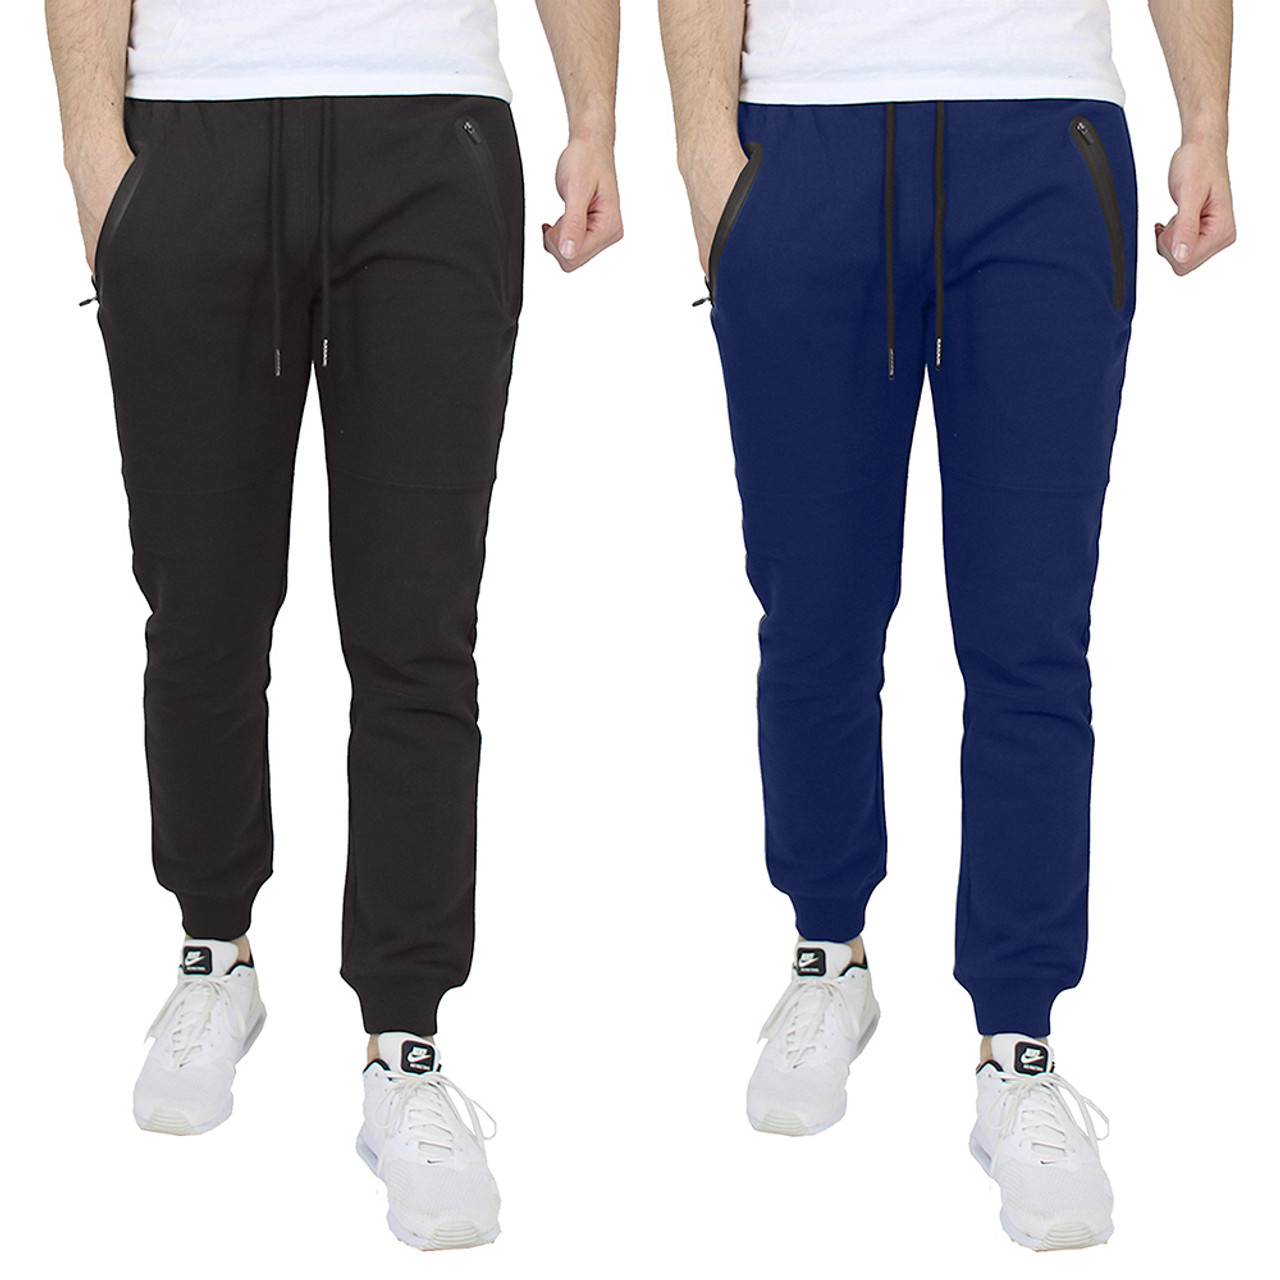 Men’s Slim Fit Fleece Jogger Sweatpants (2-Pack) product image